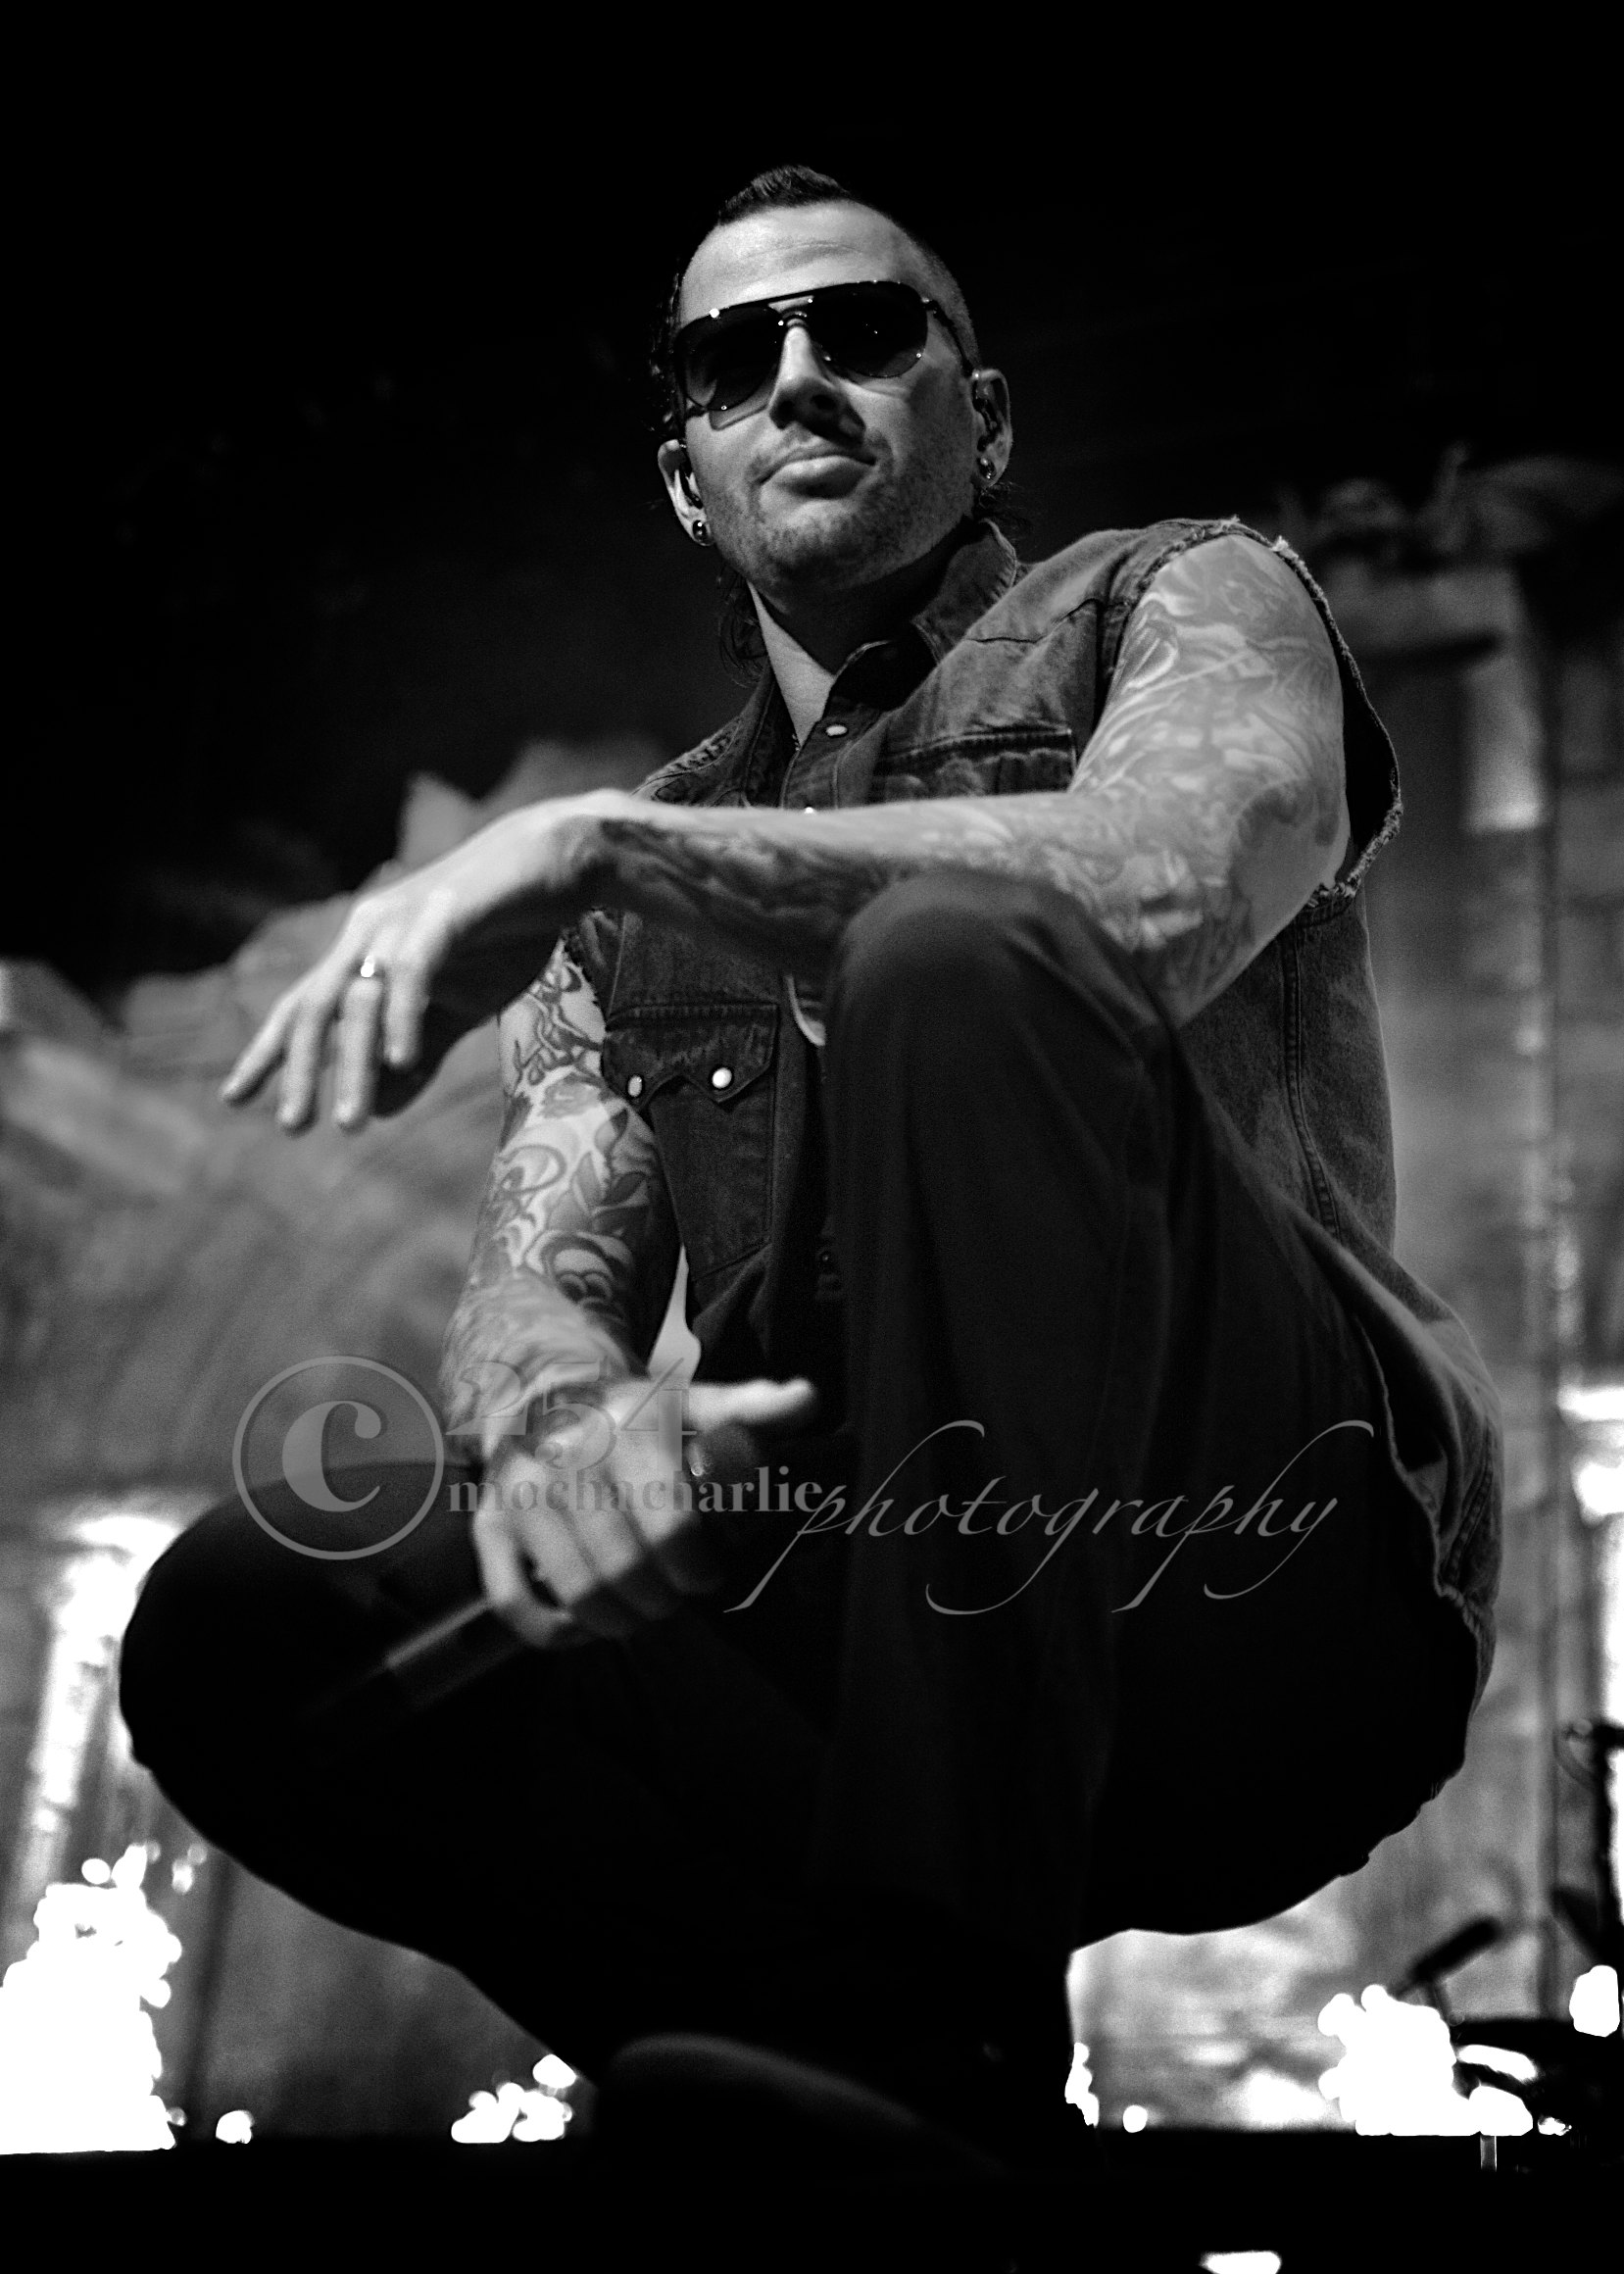 Avenged Sevenfold at Mayhem Festival (Photo by Mocha Charlie)